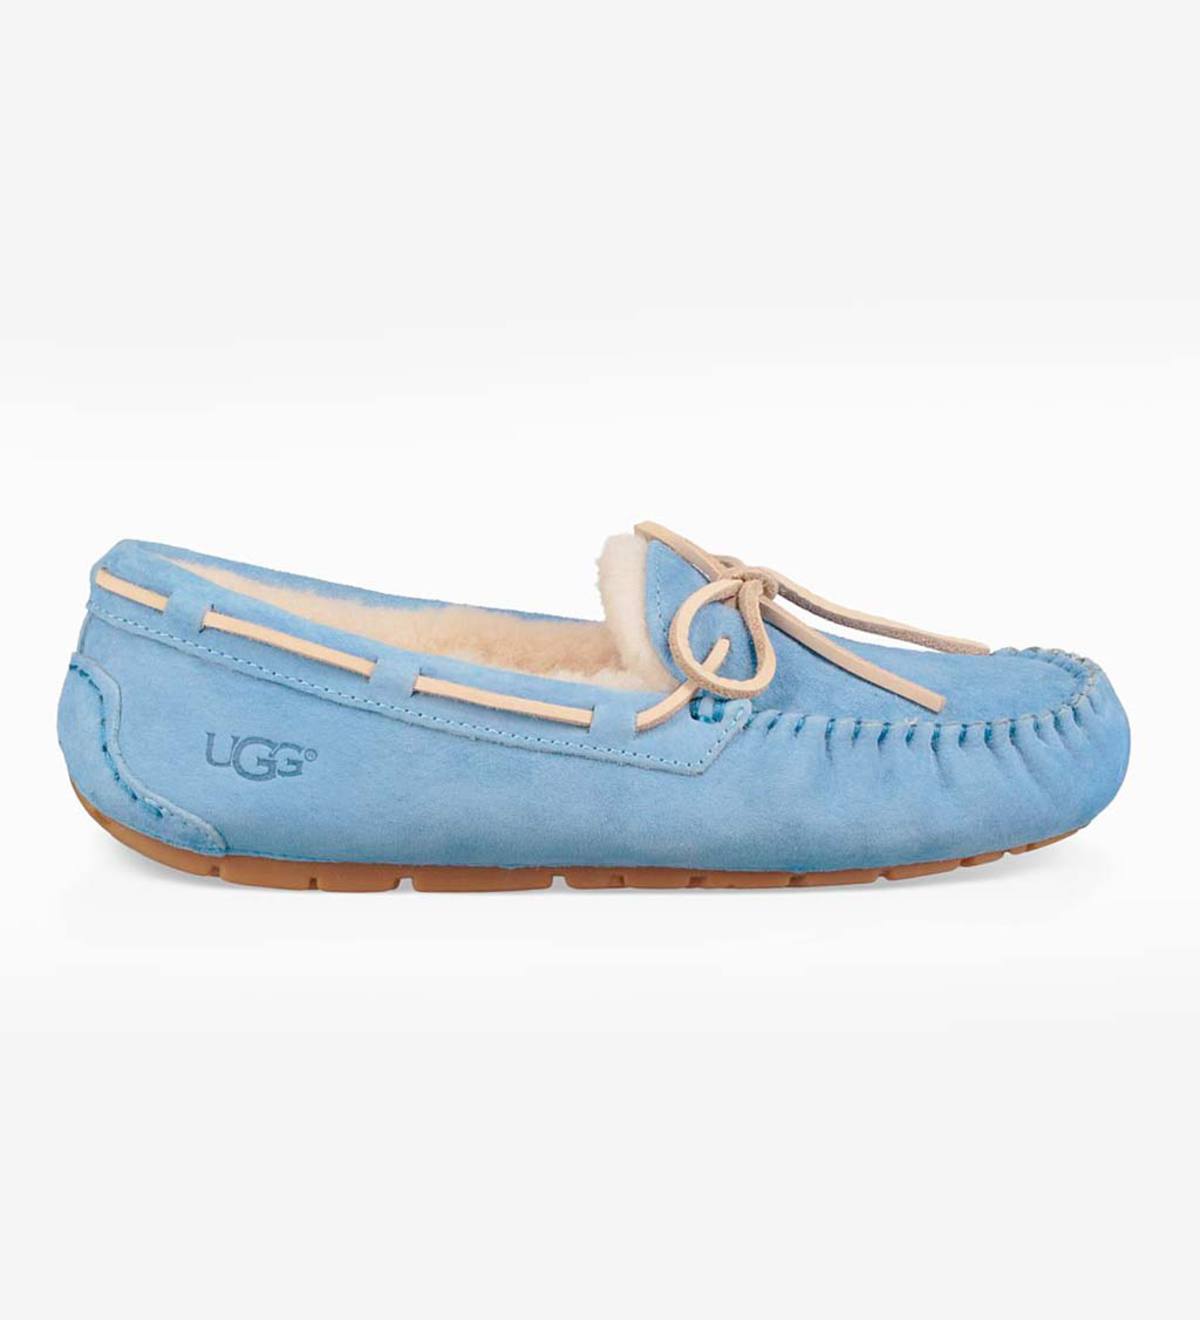 UGG Women's Dakota Moccasin Slippers - Sky Blue - Size 7